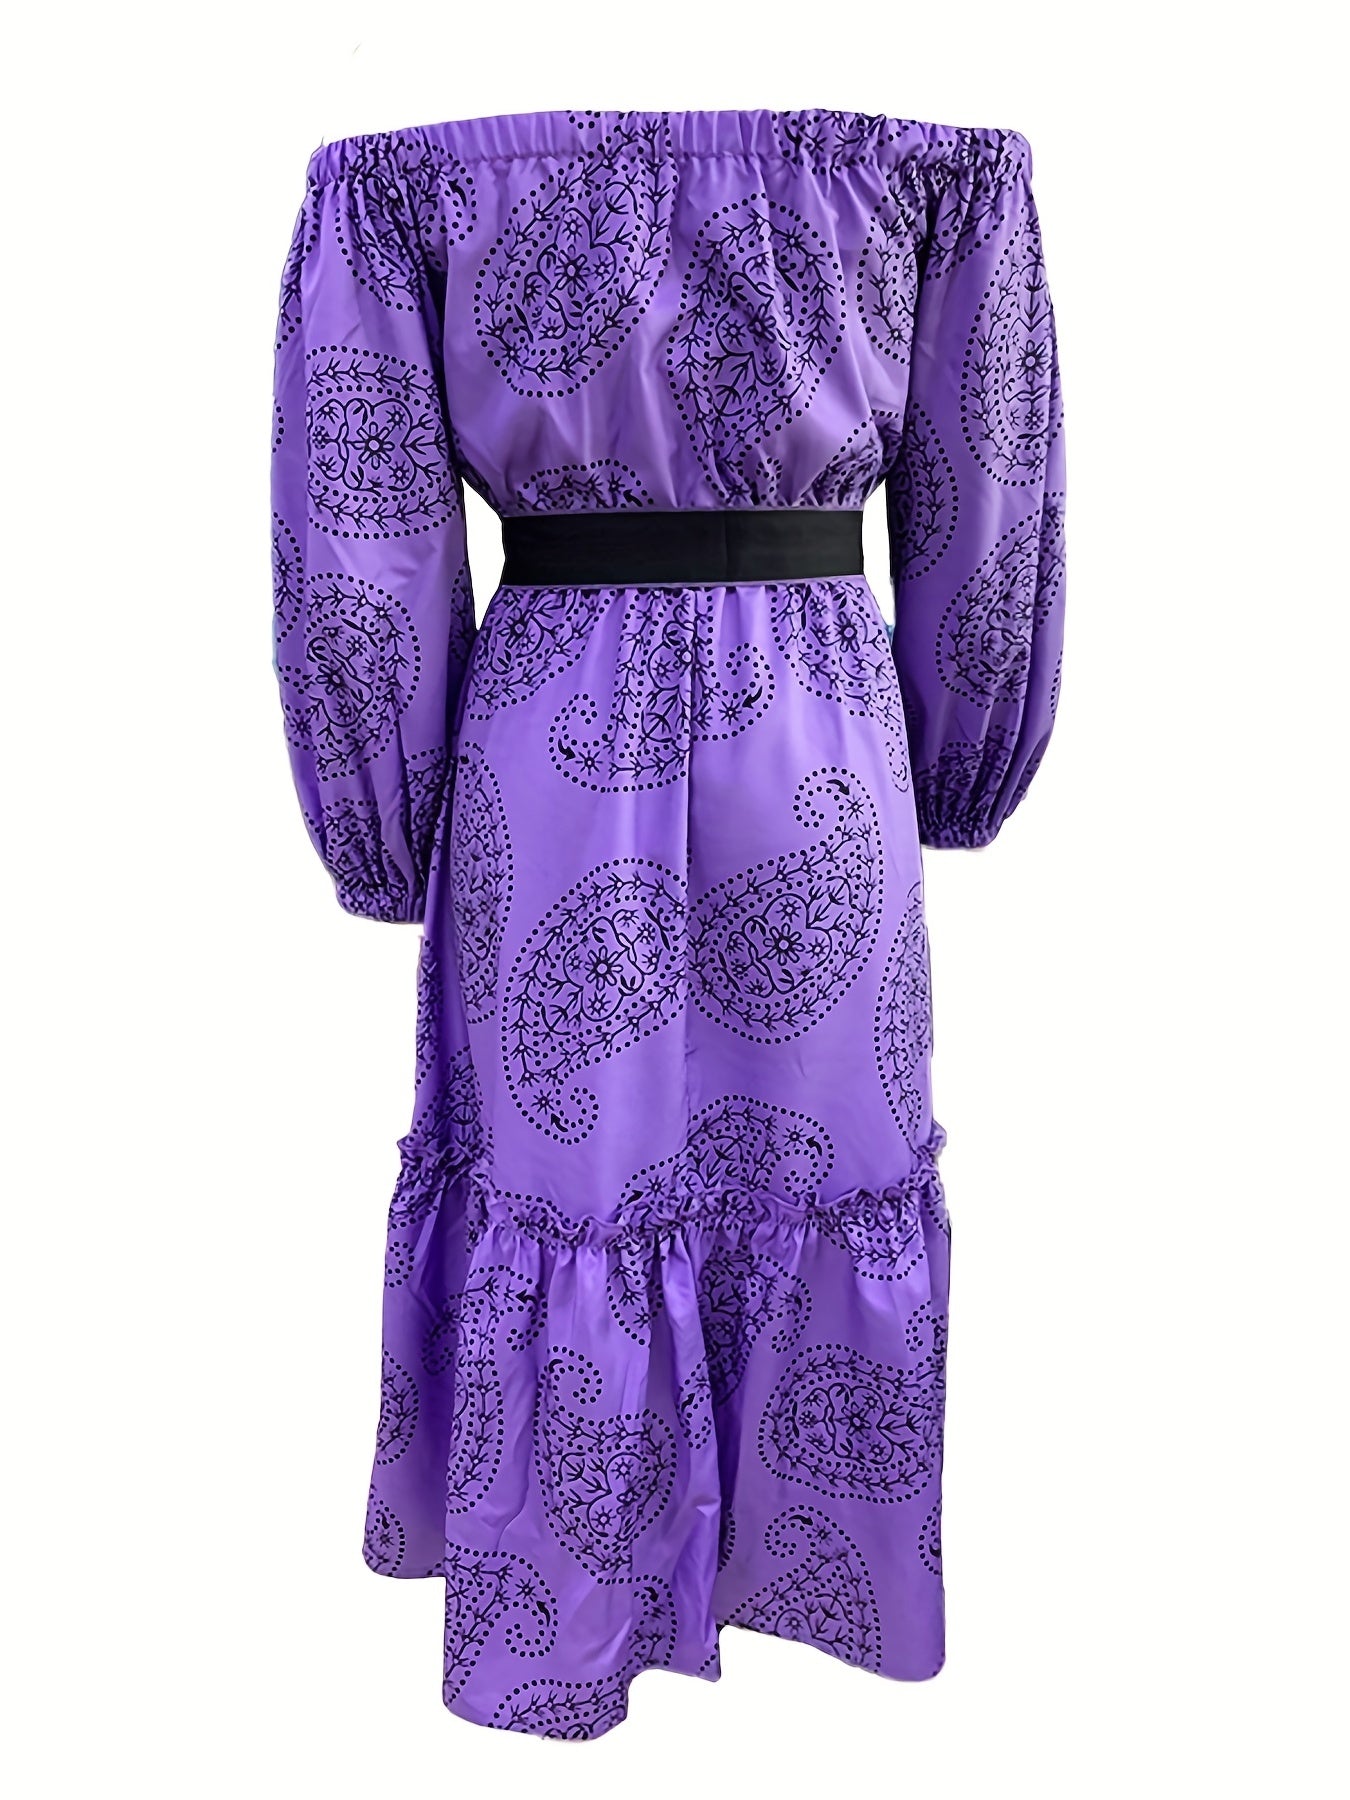 vlovelaw Paisley Print Off Shoulder Dress, Casual Ruffle Hem Long Sleeve Dress, Women's Clothing